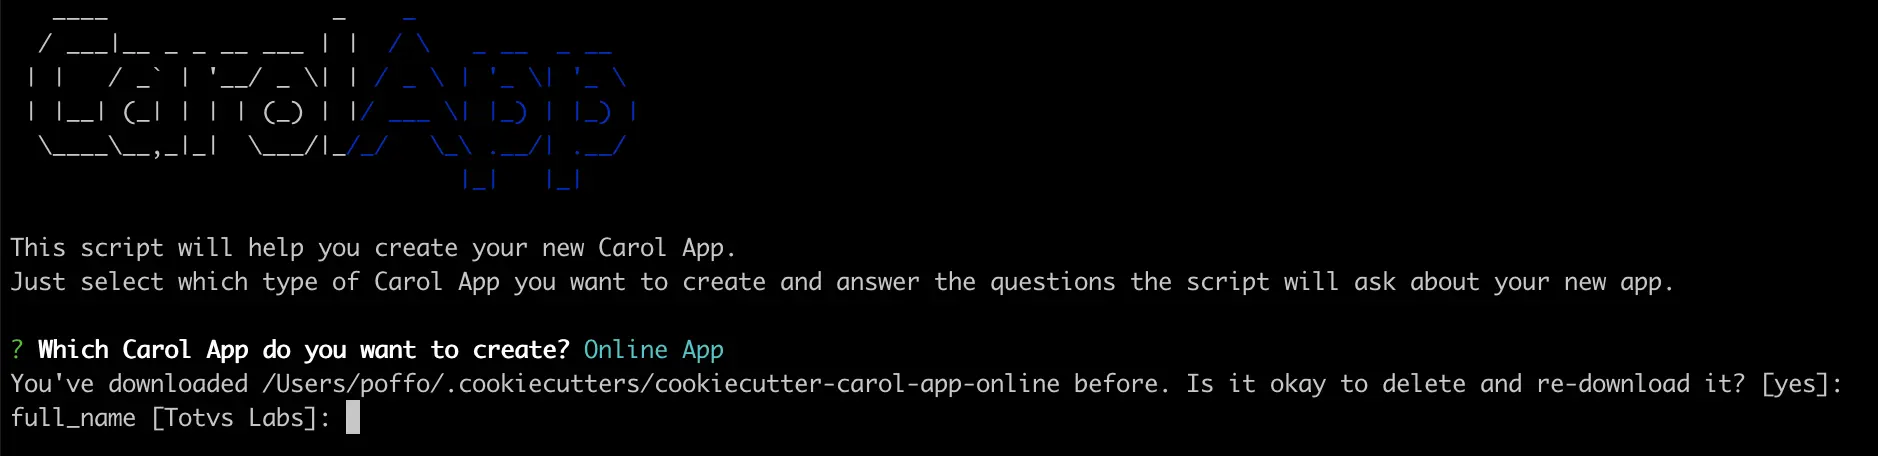 Carol App Online Step 1